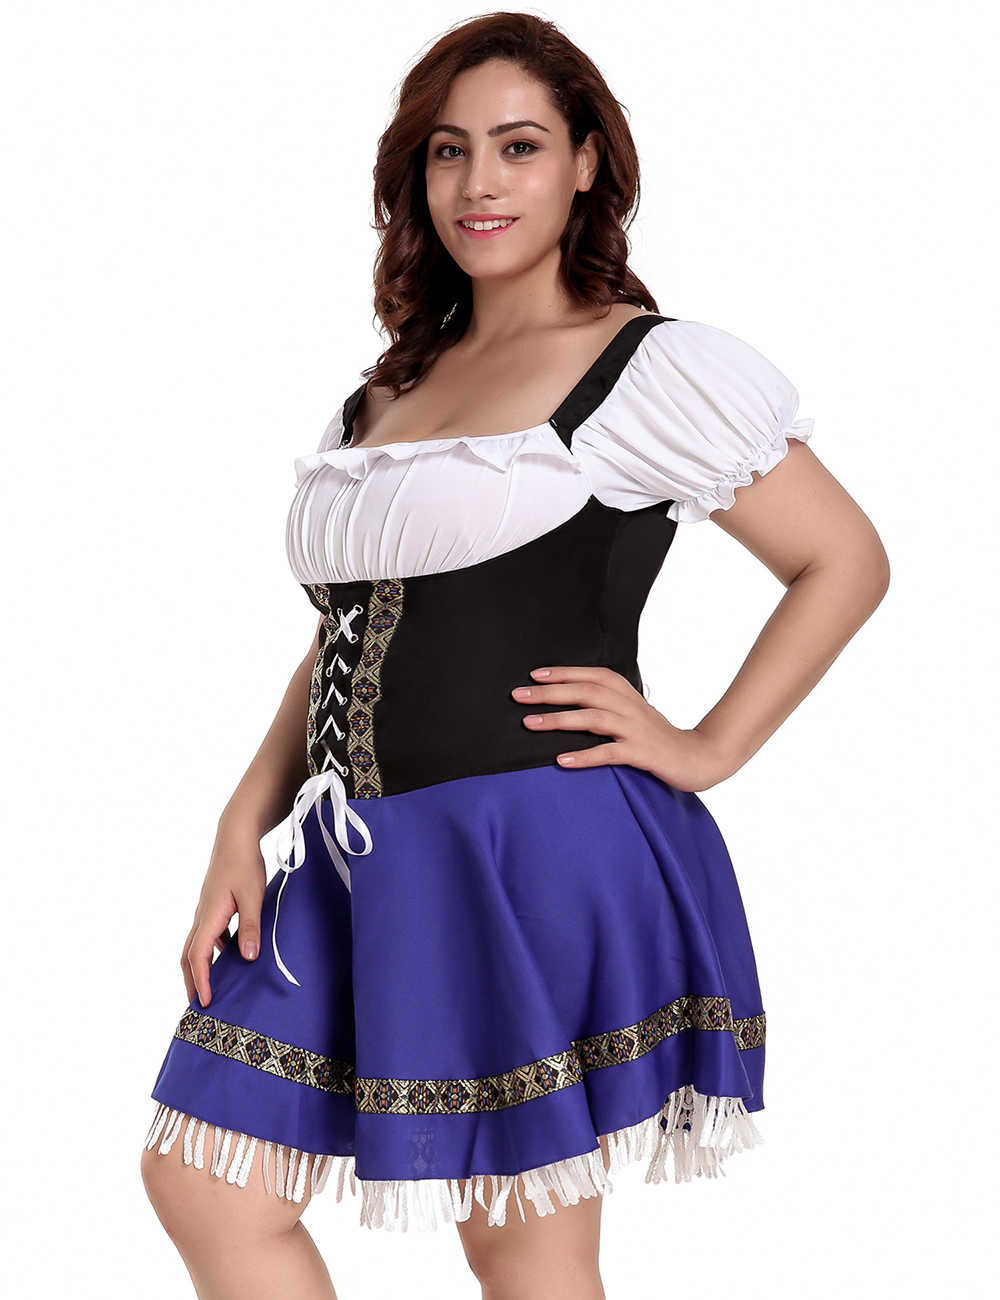 Plus Size German Beer Girl Costume Dress